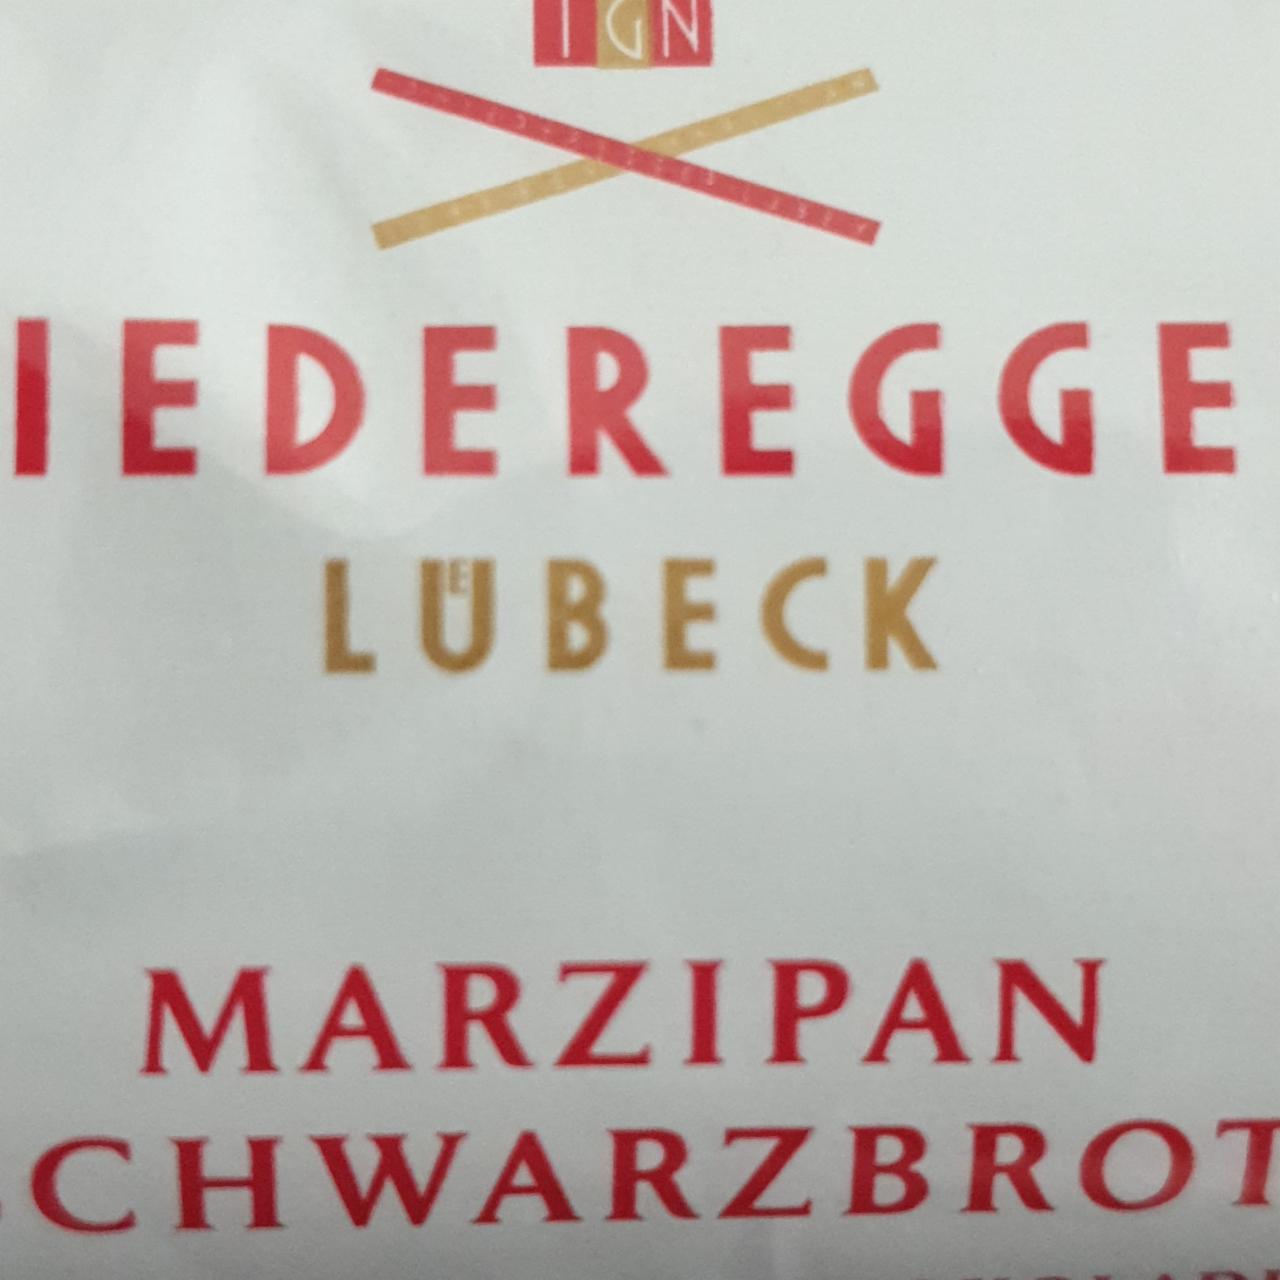 Fotografie - Marzipan Schwarzbrot Niederegger Lübeck